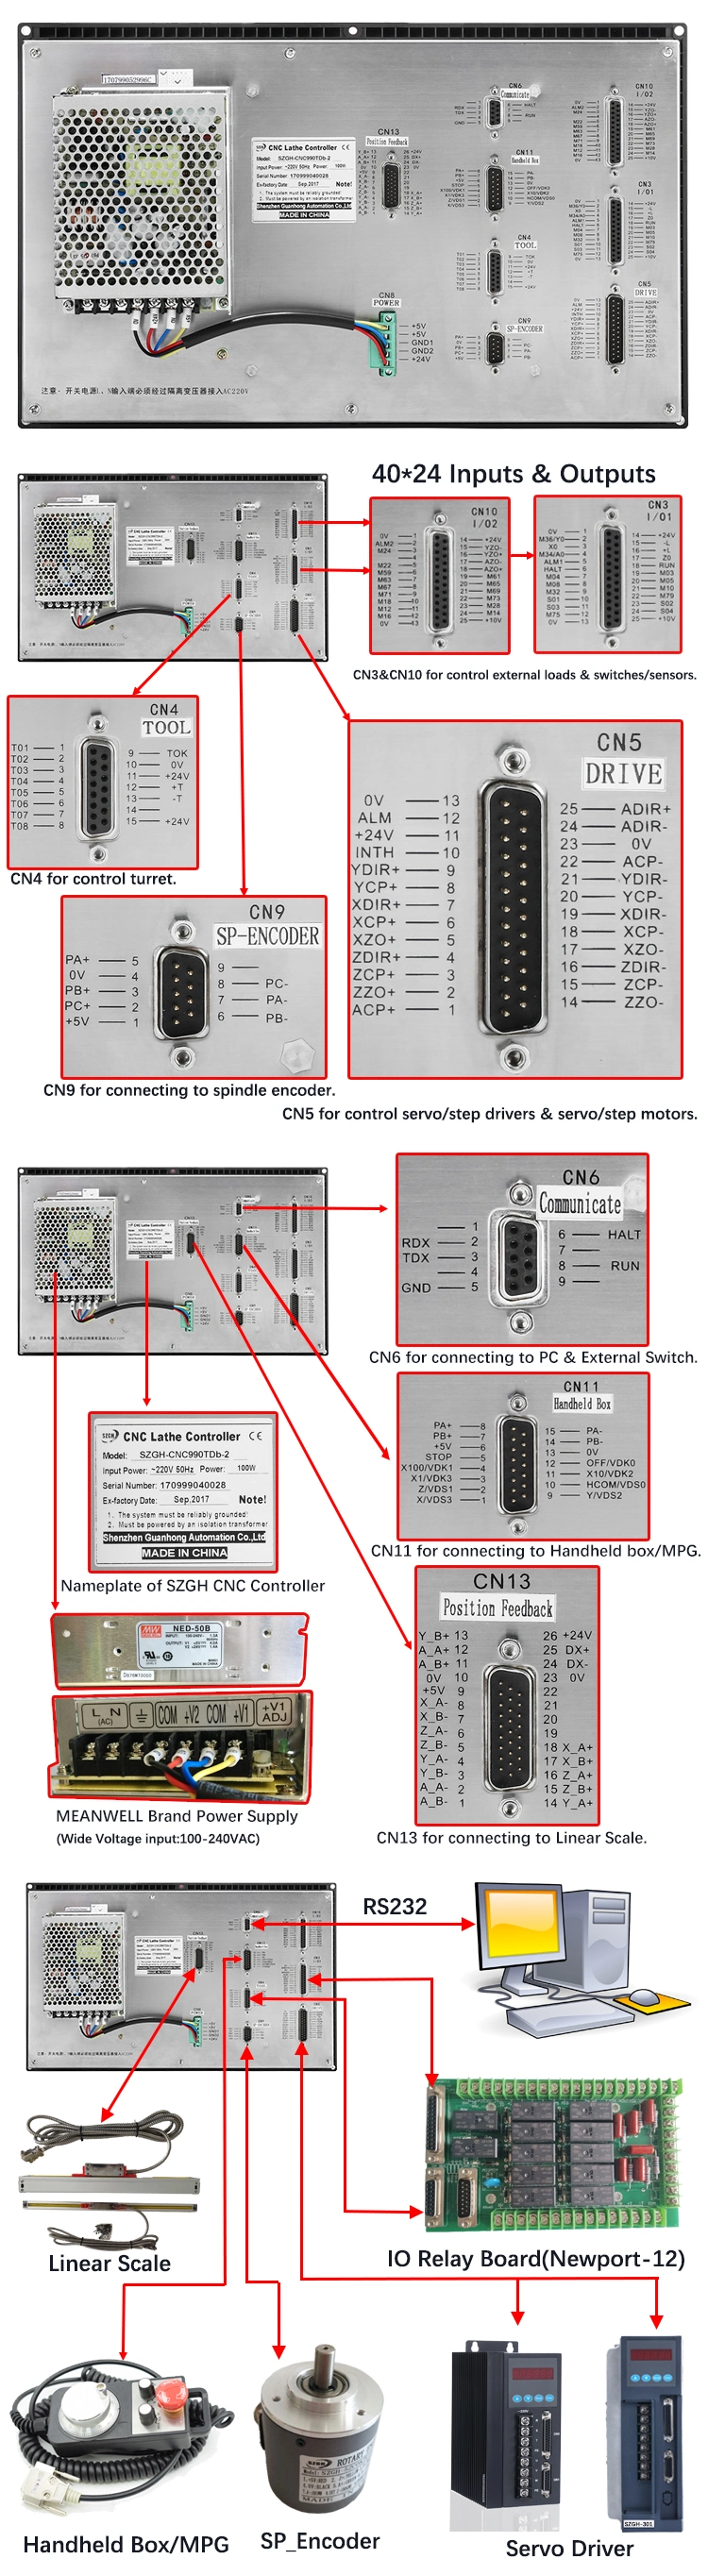 2 Axis CNC Controller Linear or Glass Scale Same as Fagor Three Axis CNC Control USB Router Controller Box